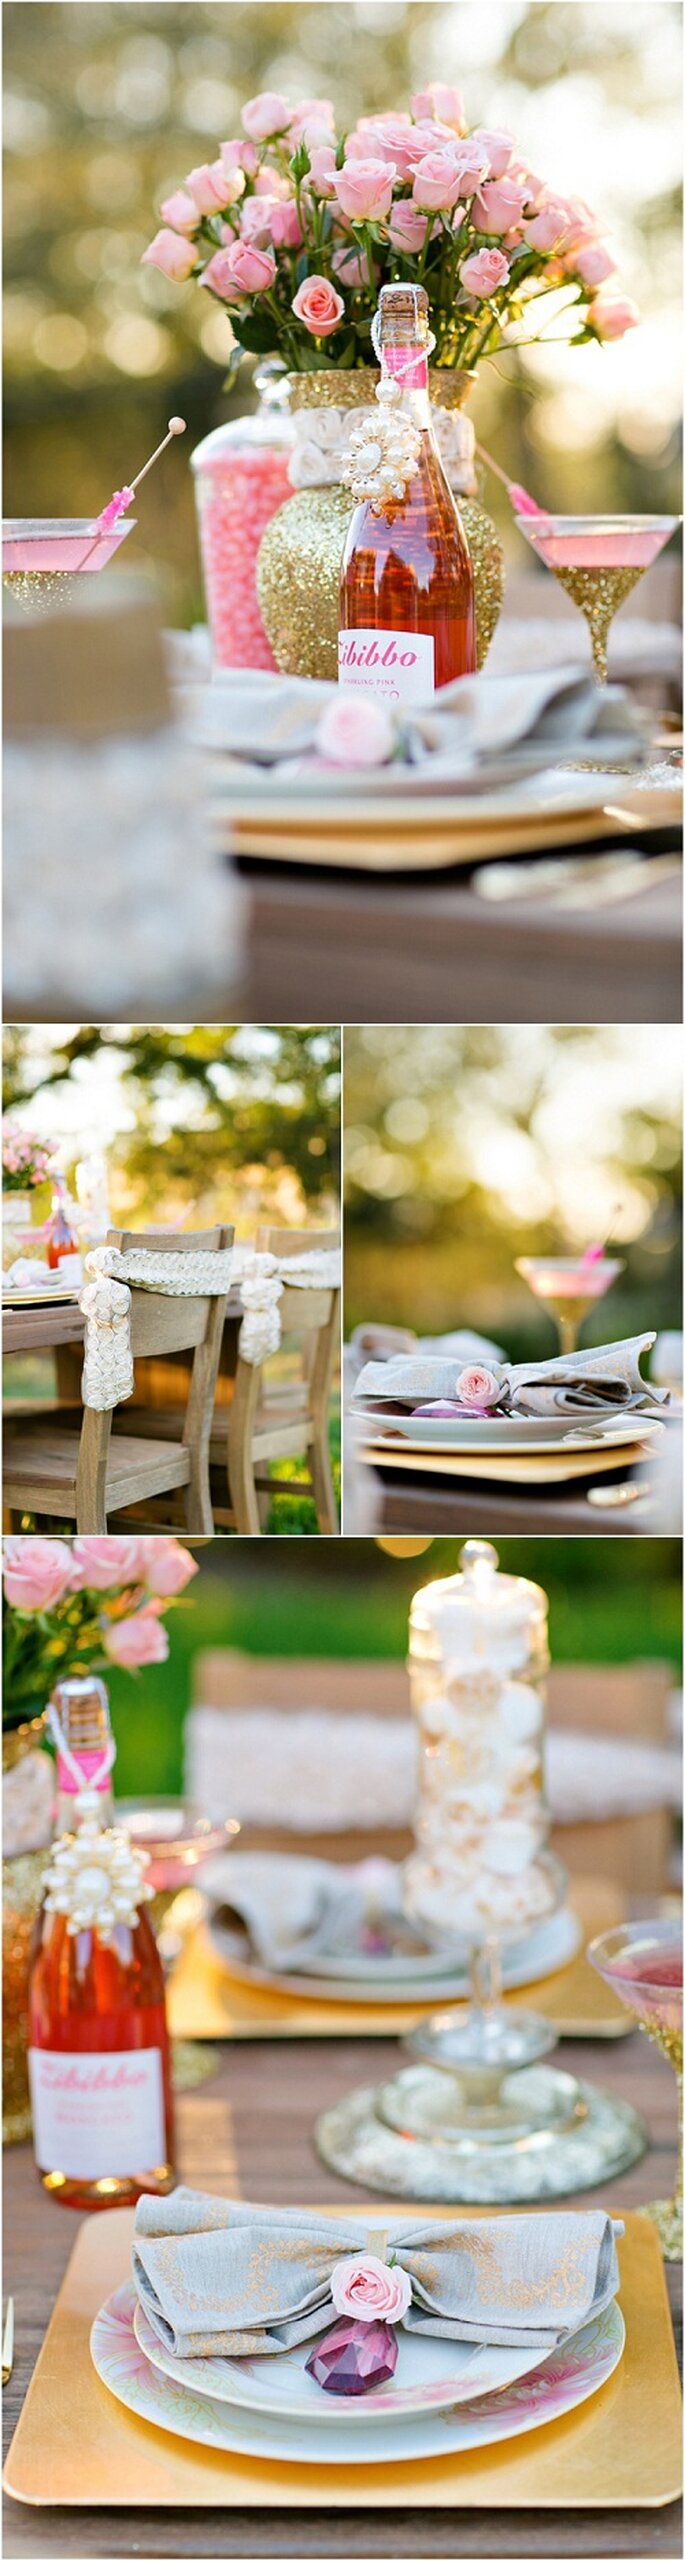 Copas de martini y centros de mesa con detalles dorados - Foto: Set Free Photography